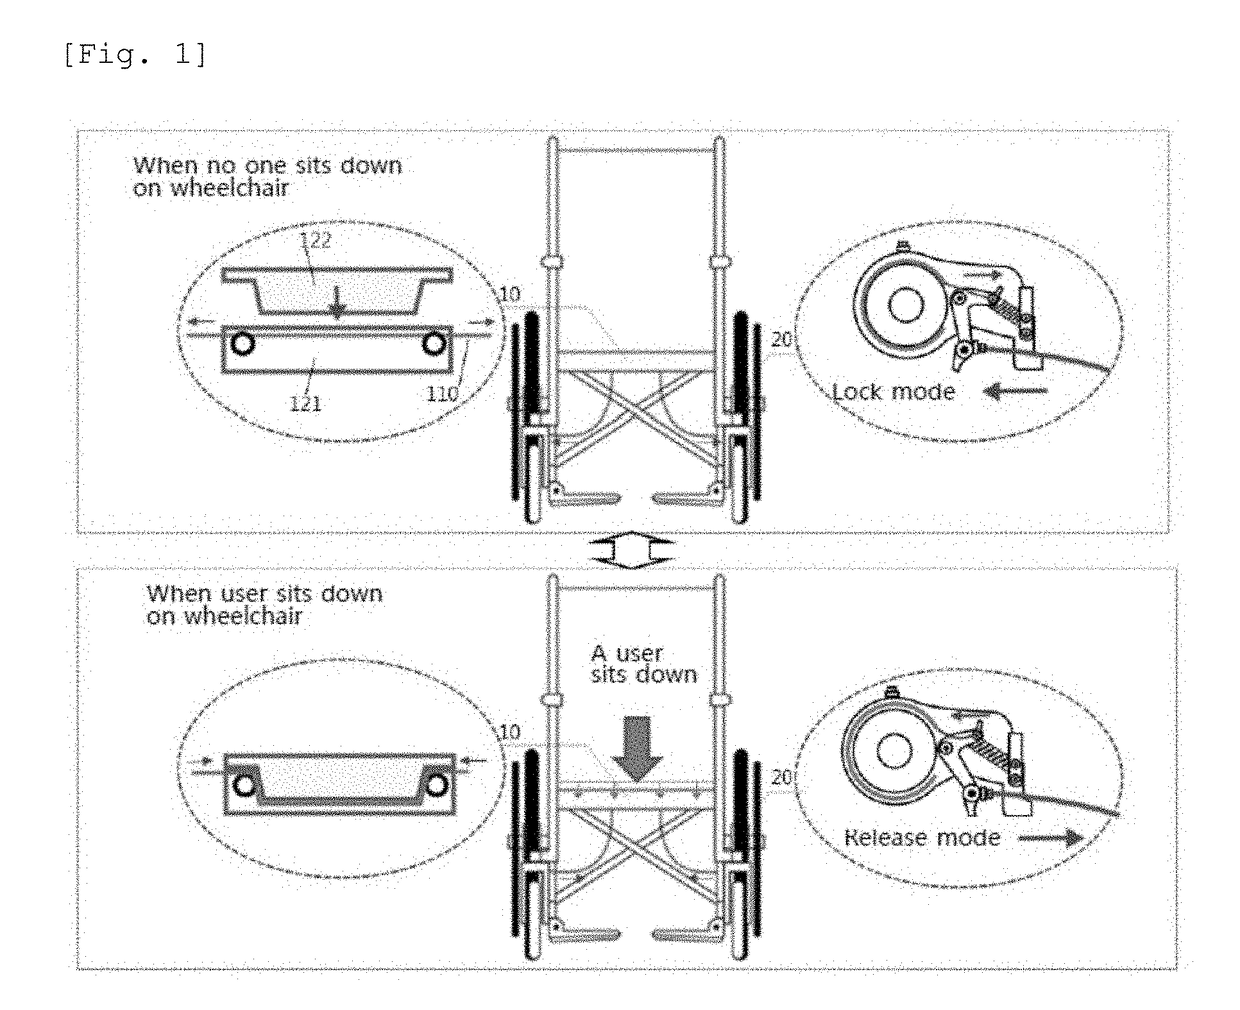 Wheelchair brake system